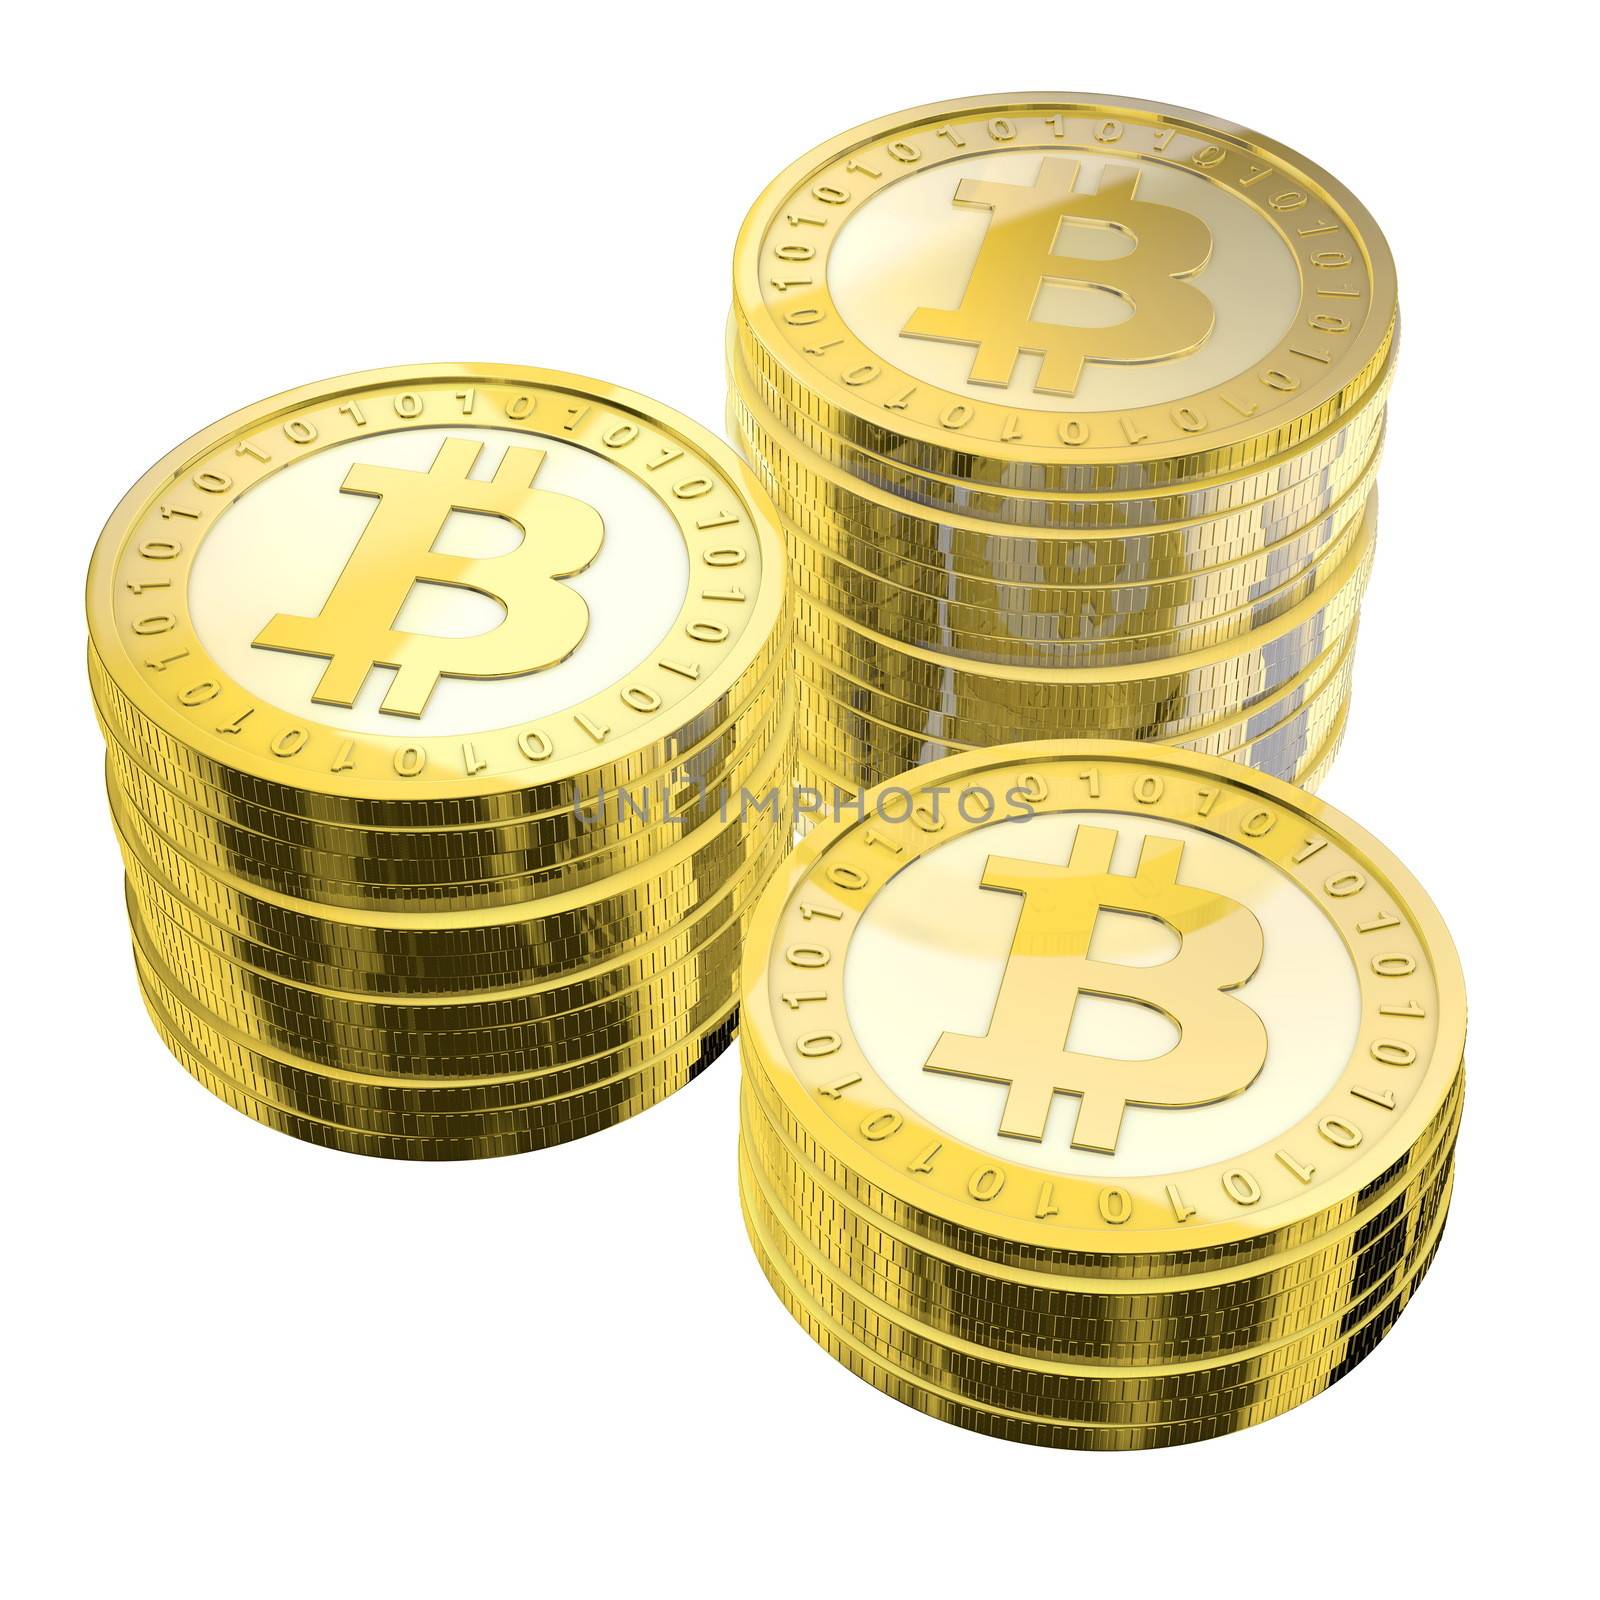 Three Stacks of Bitcoins by PixBox